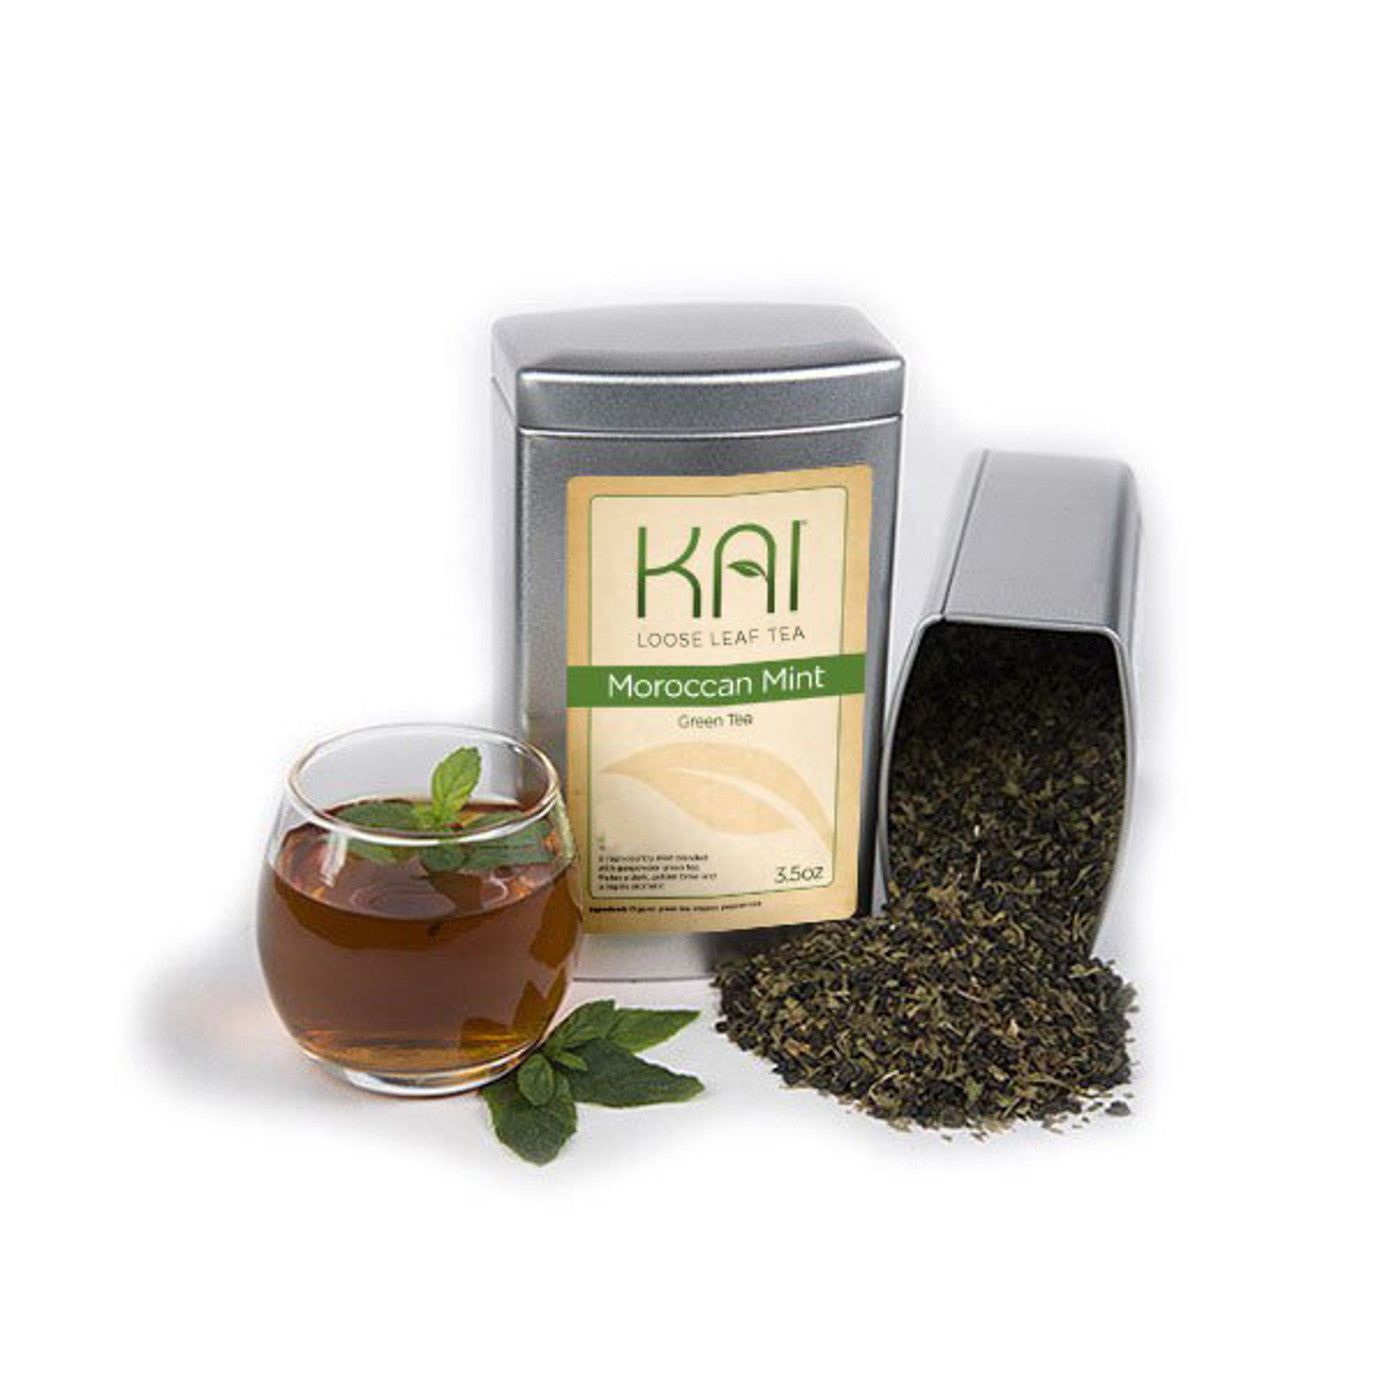 Kai Loose Leaf Tea - Moroccan Mint